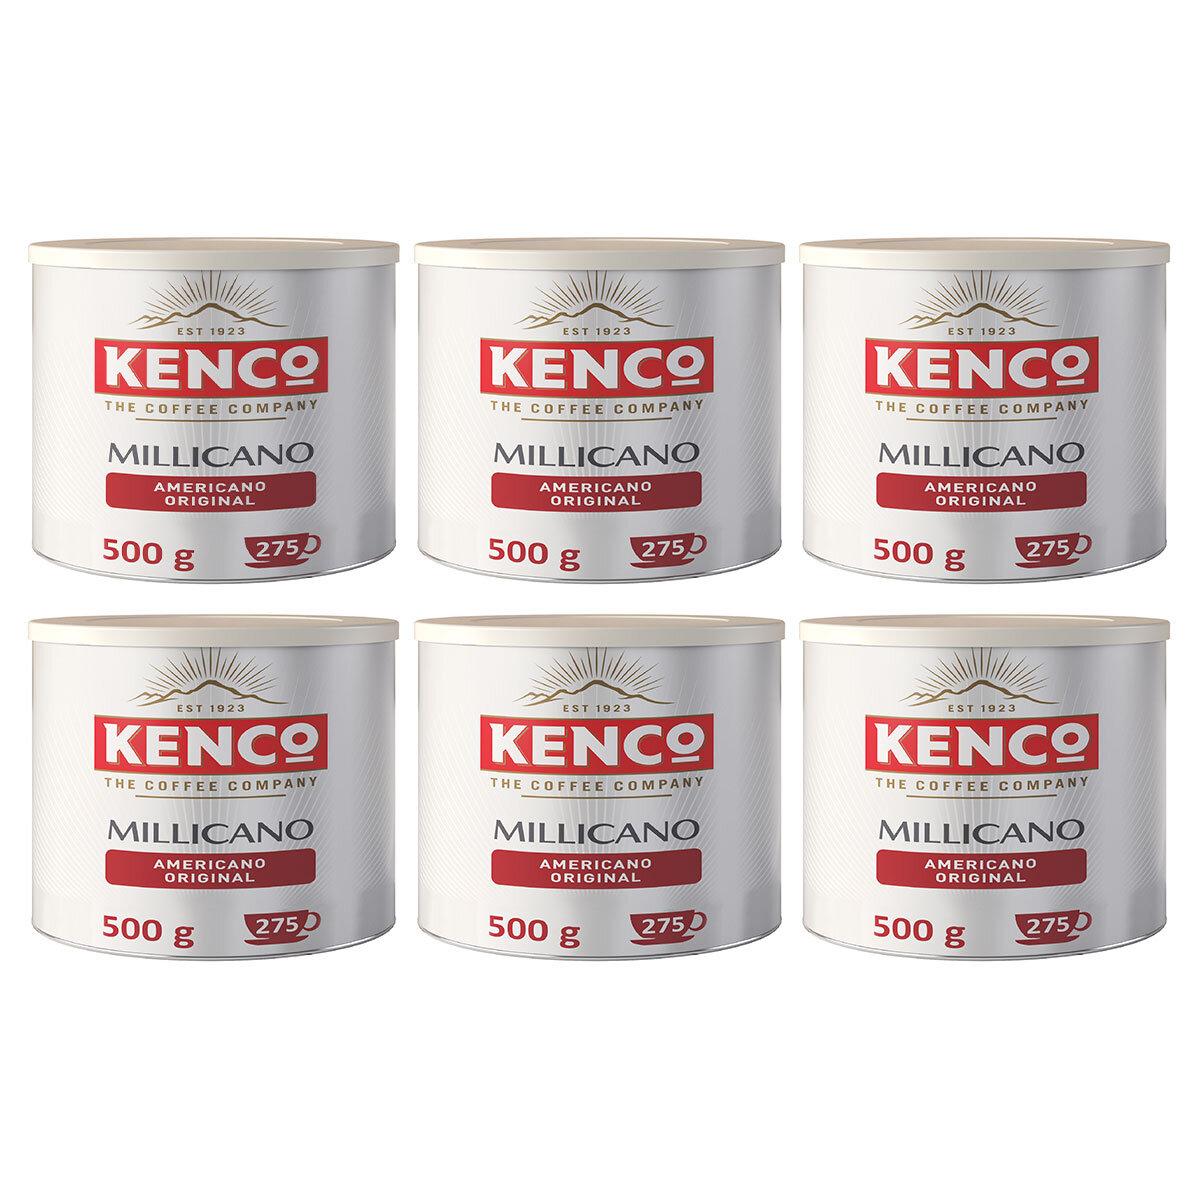 Kenco Millicano Americano Original, 6 x 500g